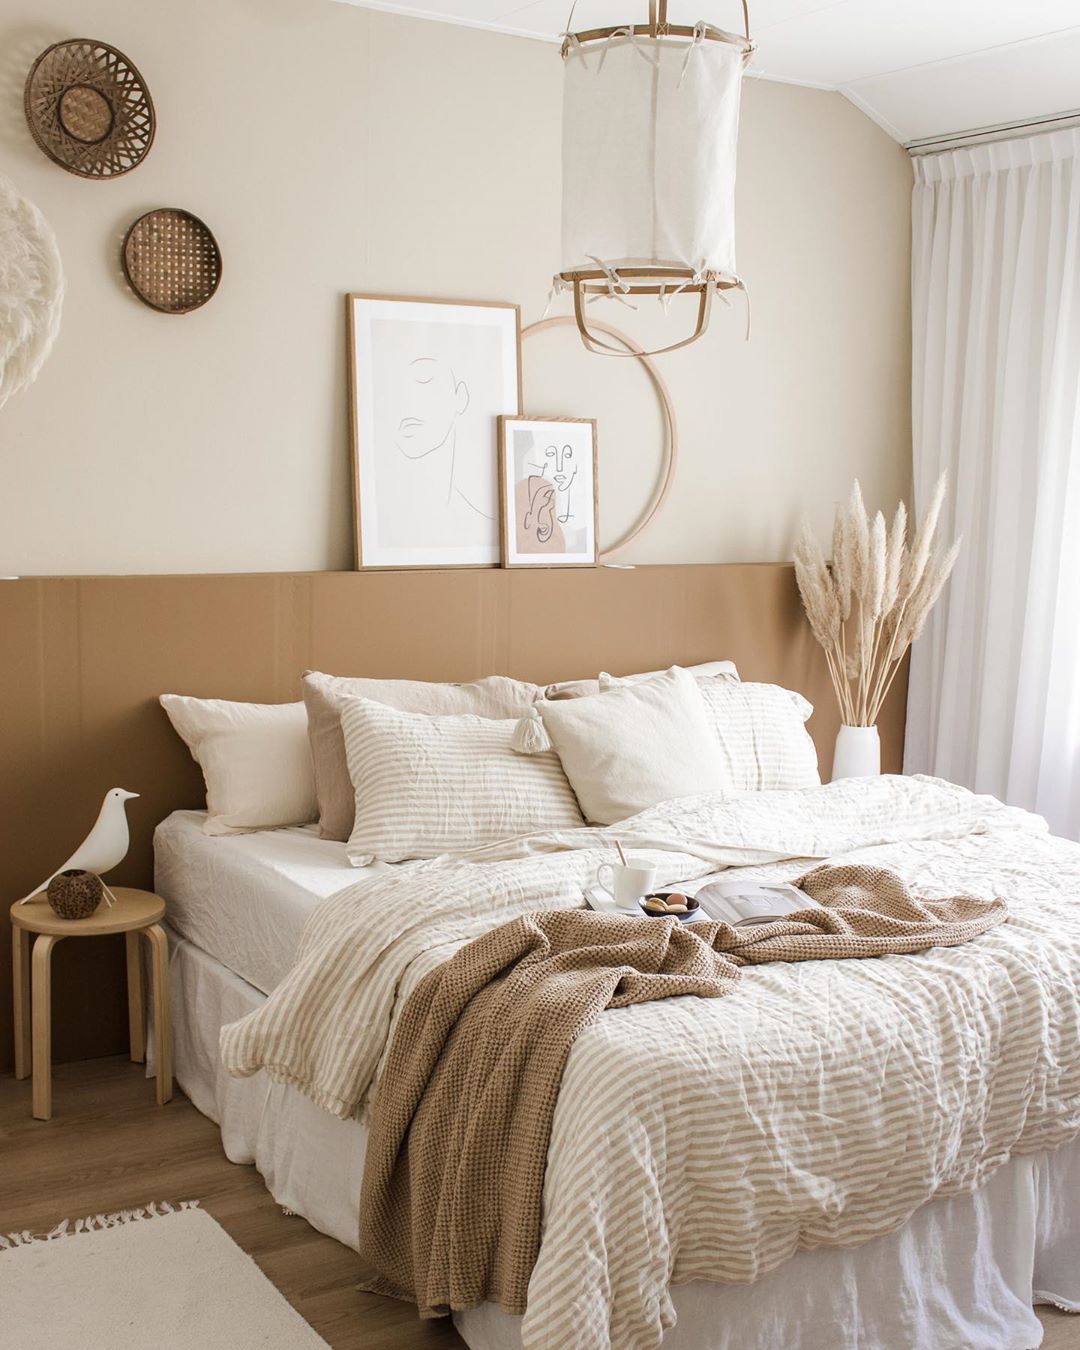 Create an Earthy Tones Bedroom